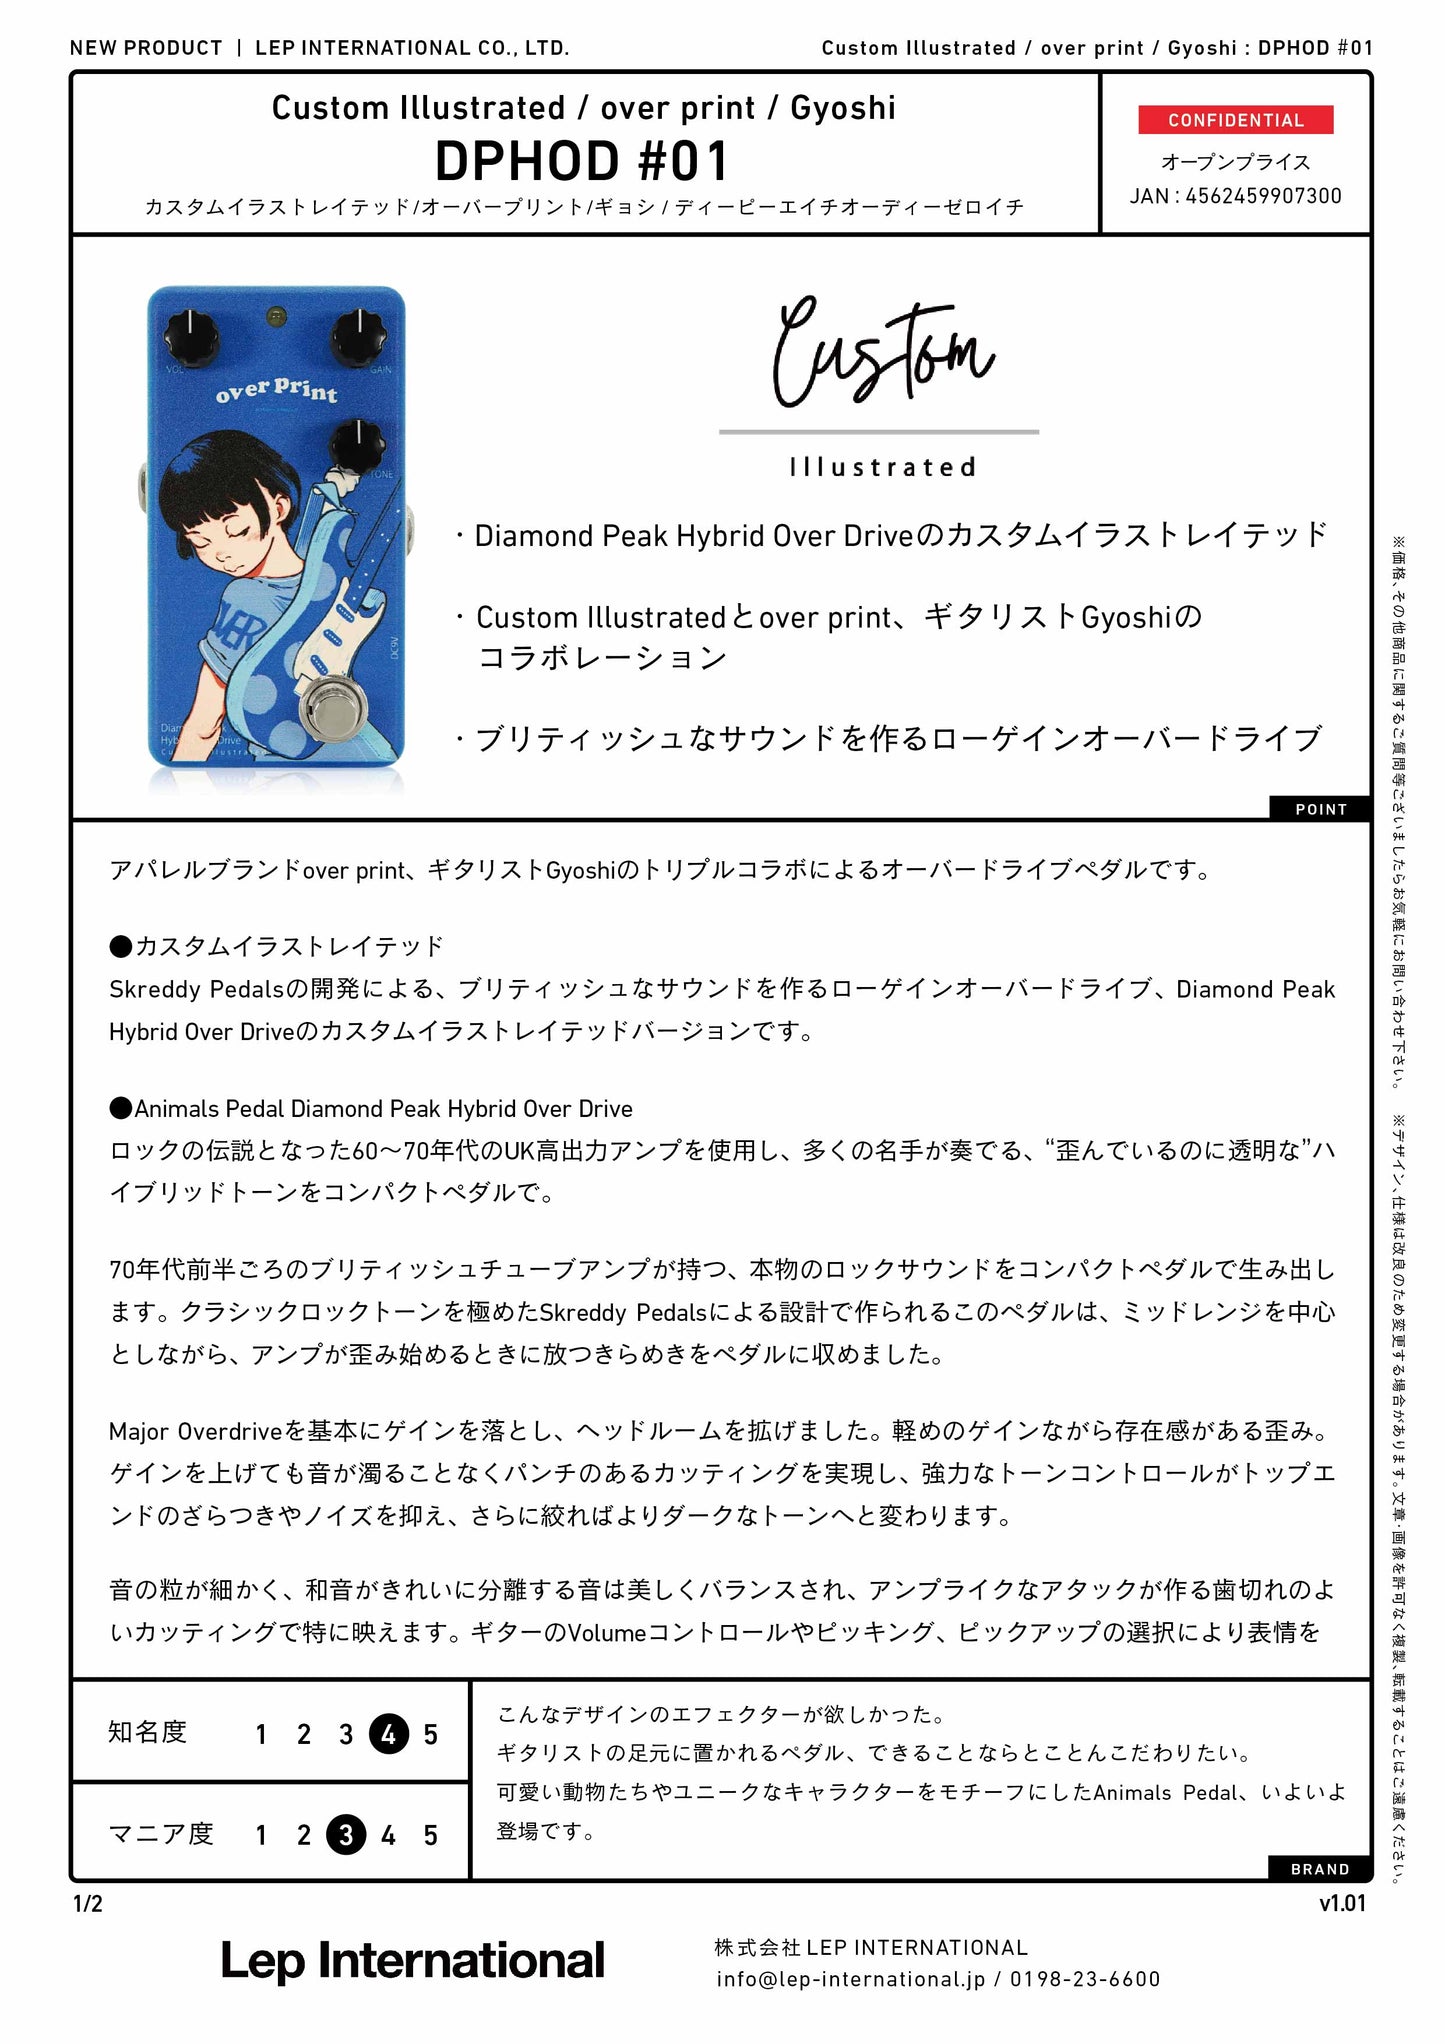 Custom Illustrated / over print / Gyoshi / DPHOD #01